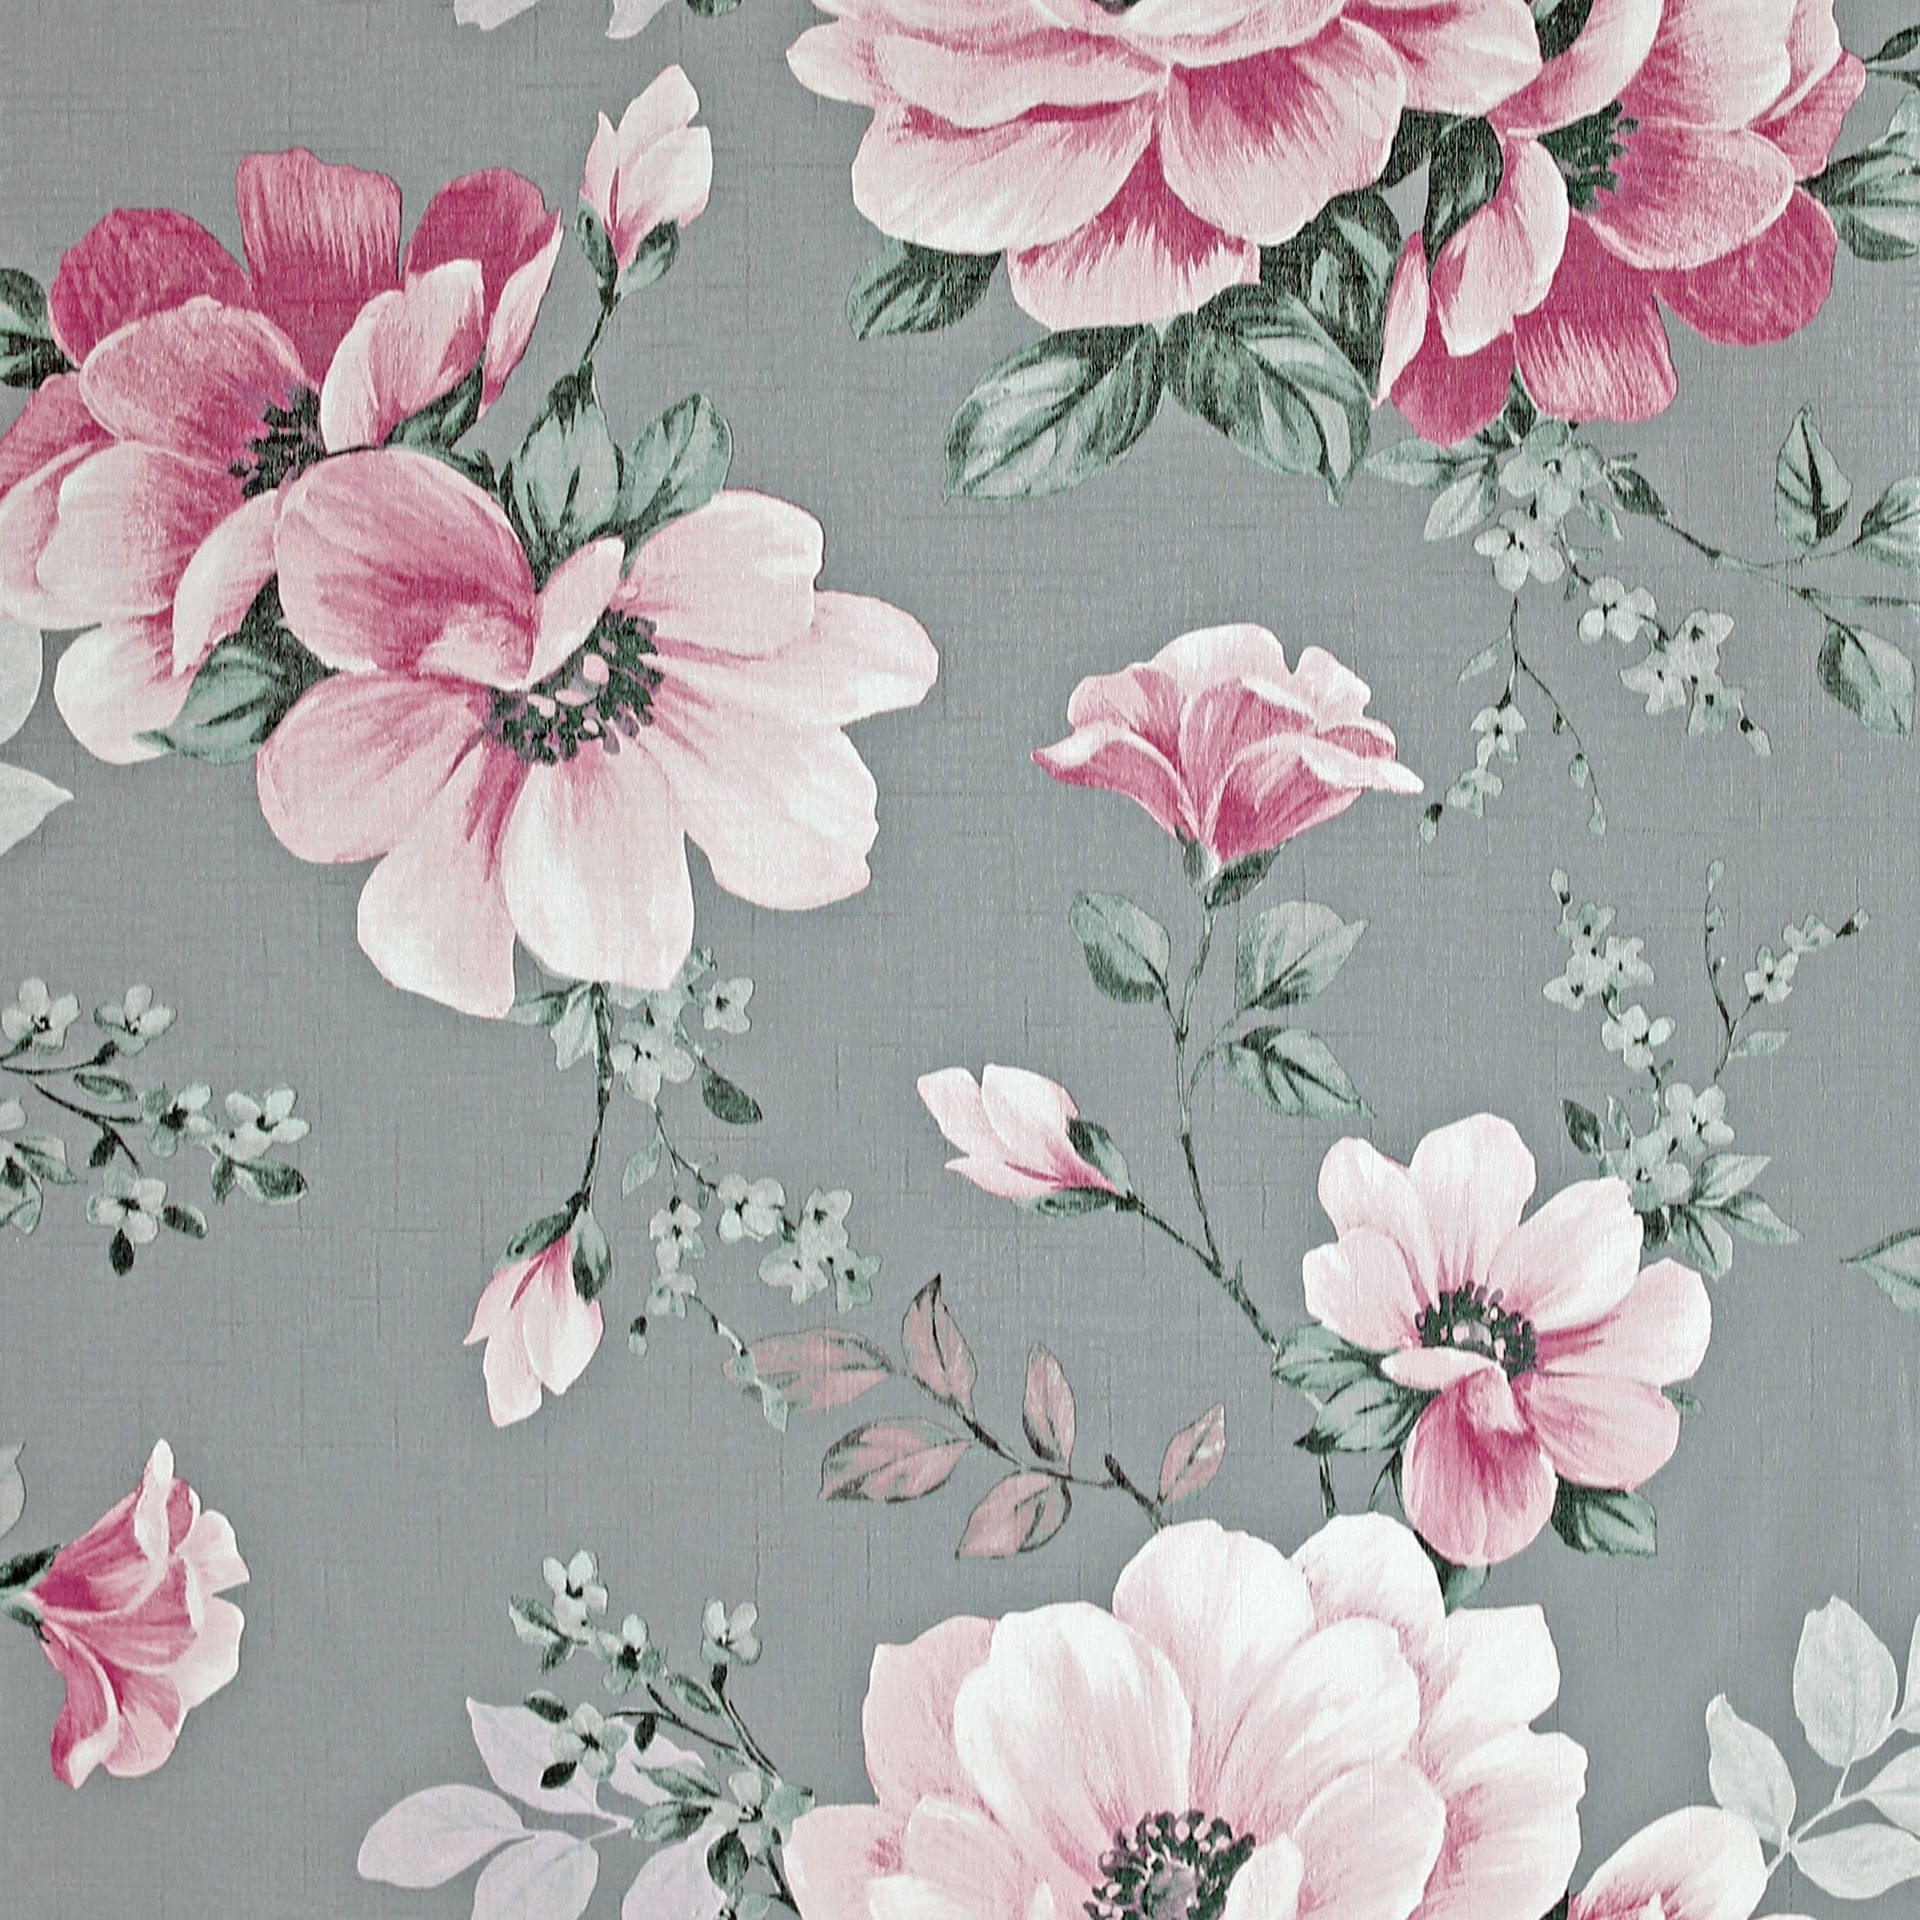 Artistic Floral Phone Wallpaper Wallpaper